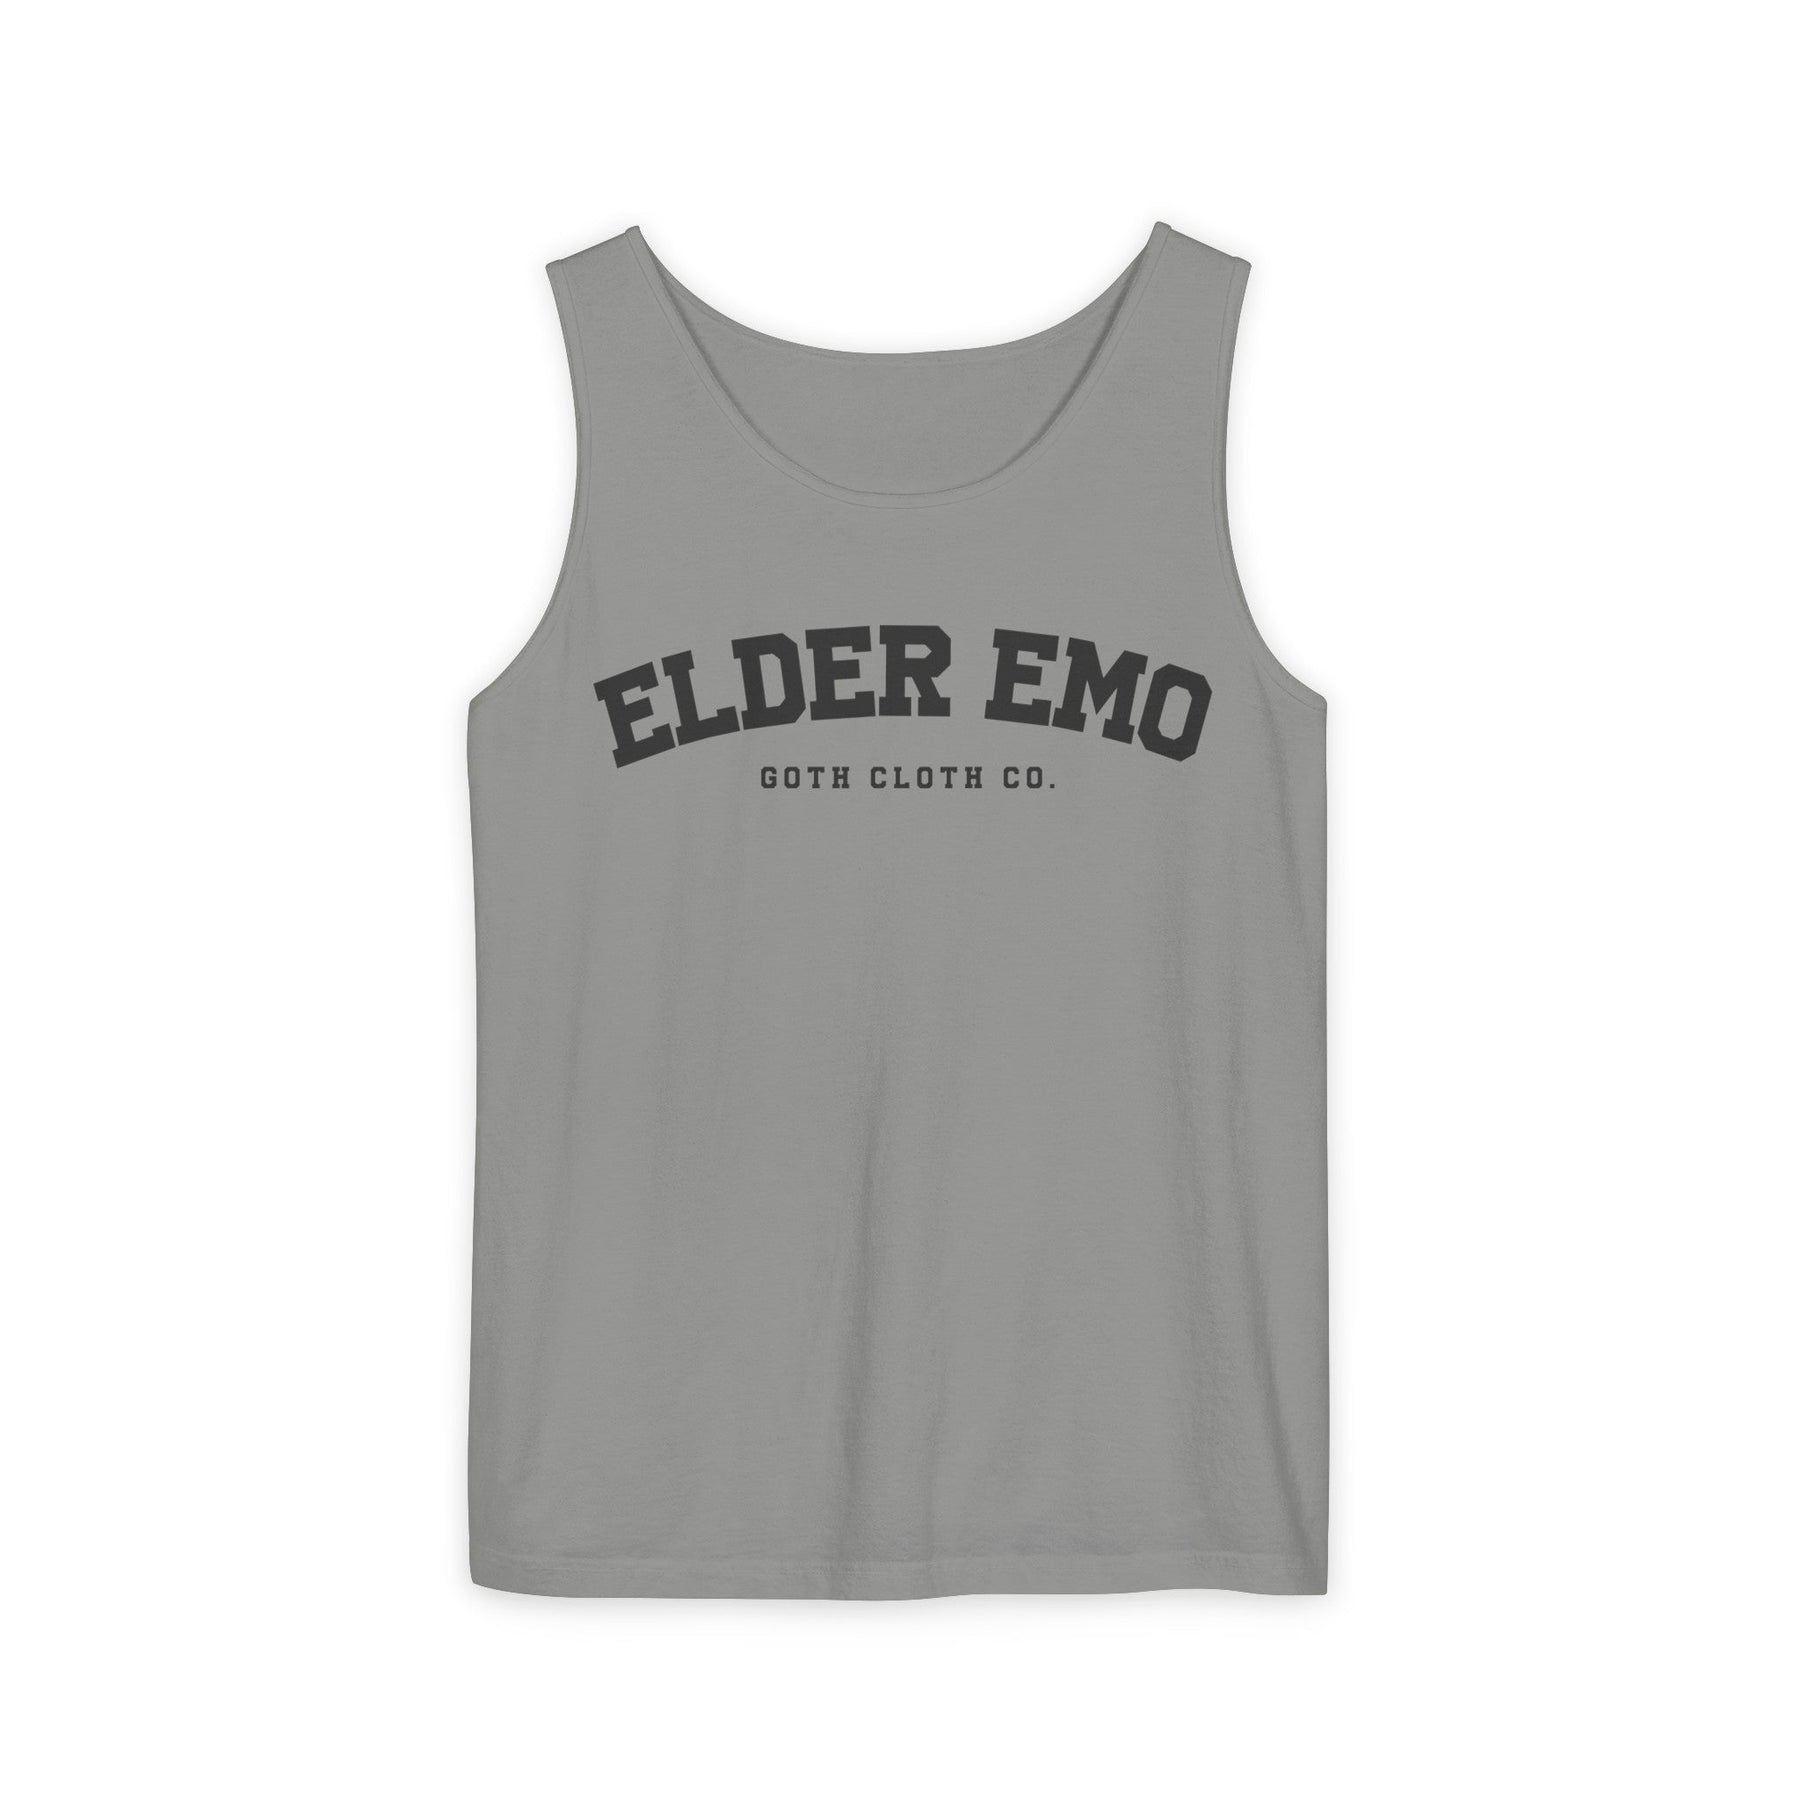 Elder Emo College Unisex Tank Top - Goth Cloth Co.Tank Top26146646191909789648